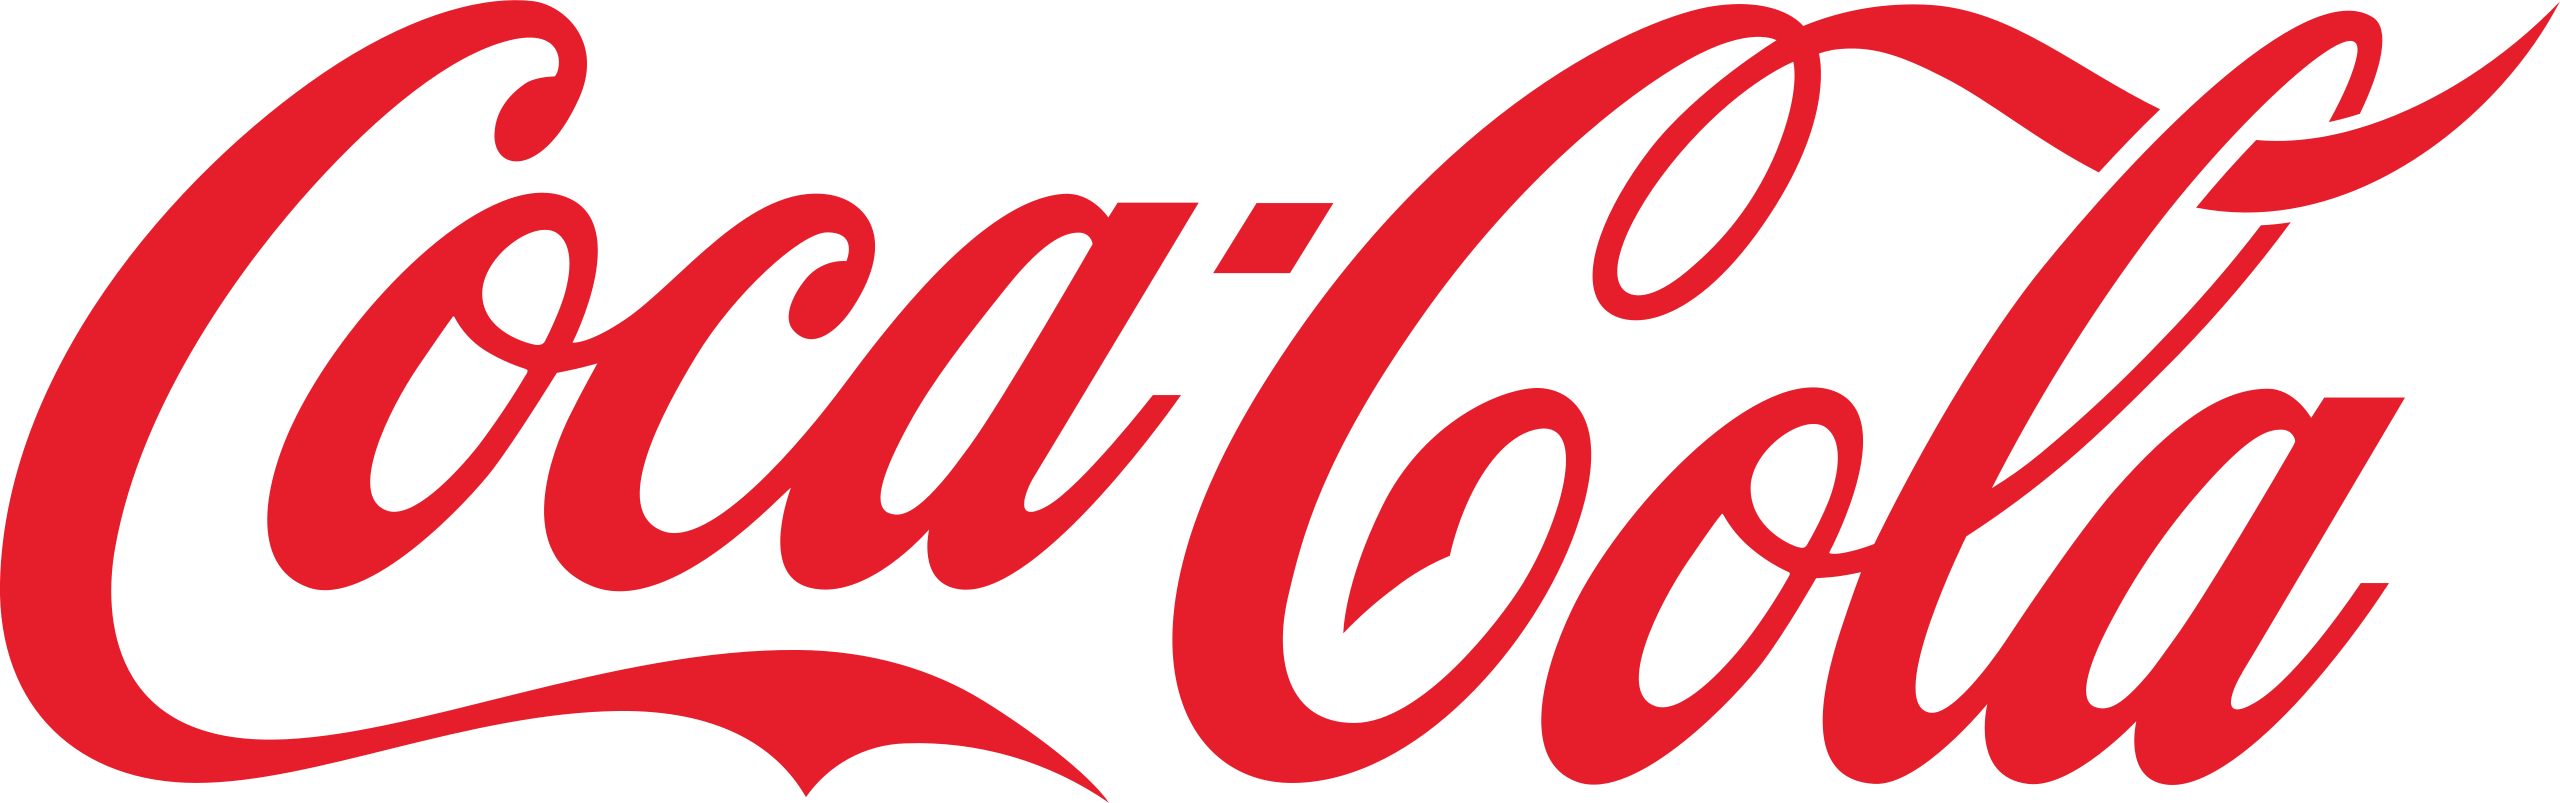 Coca Cola kontakt